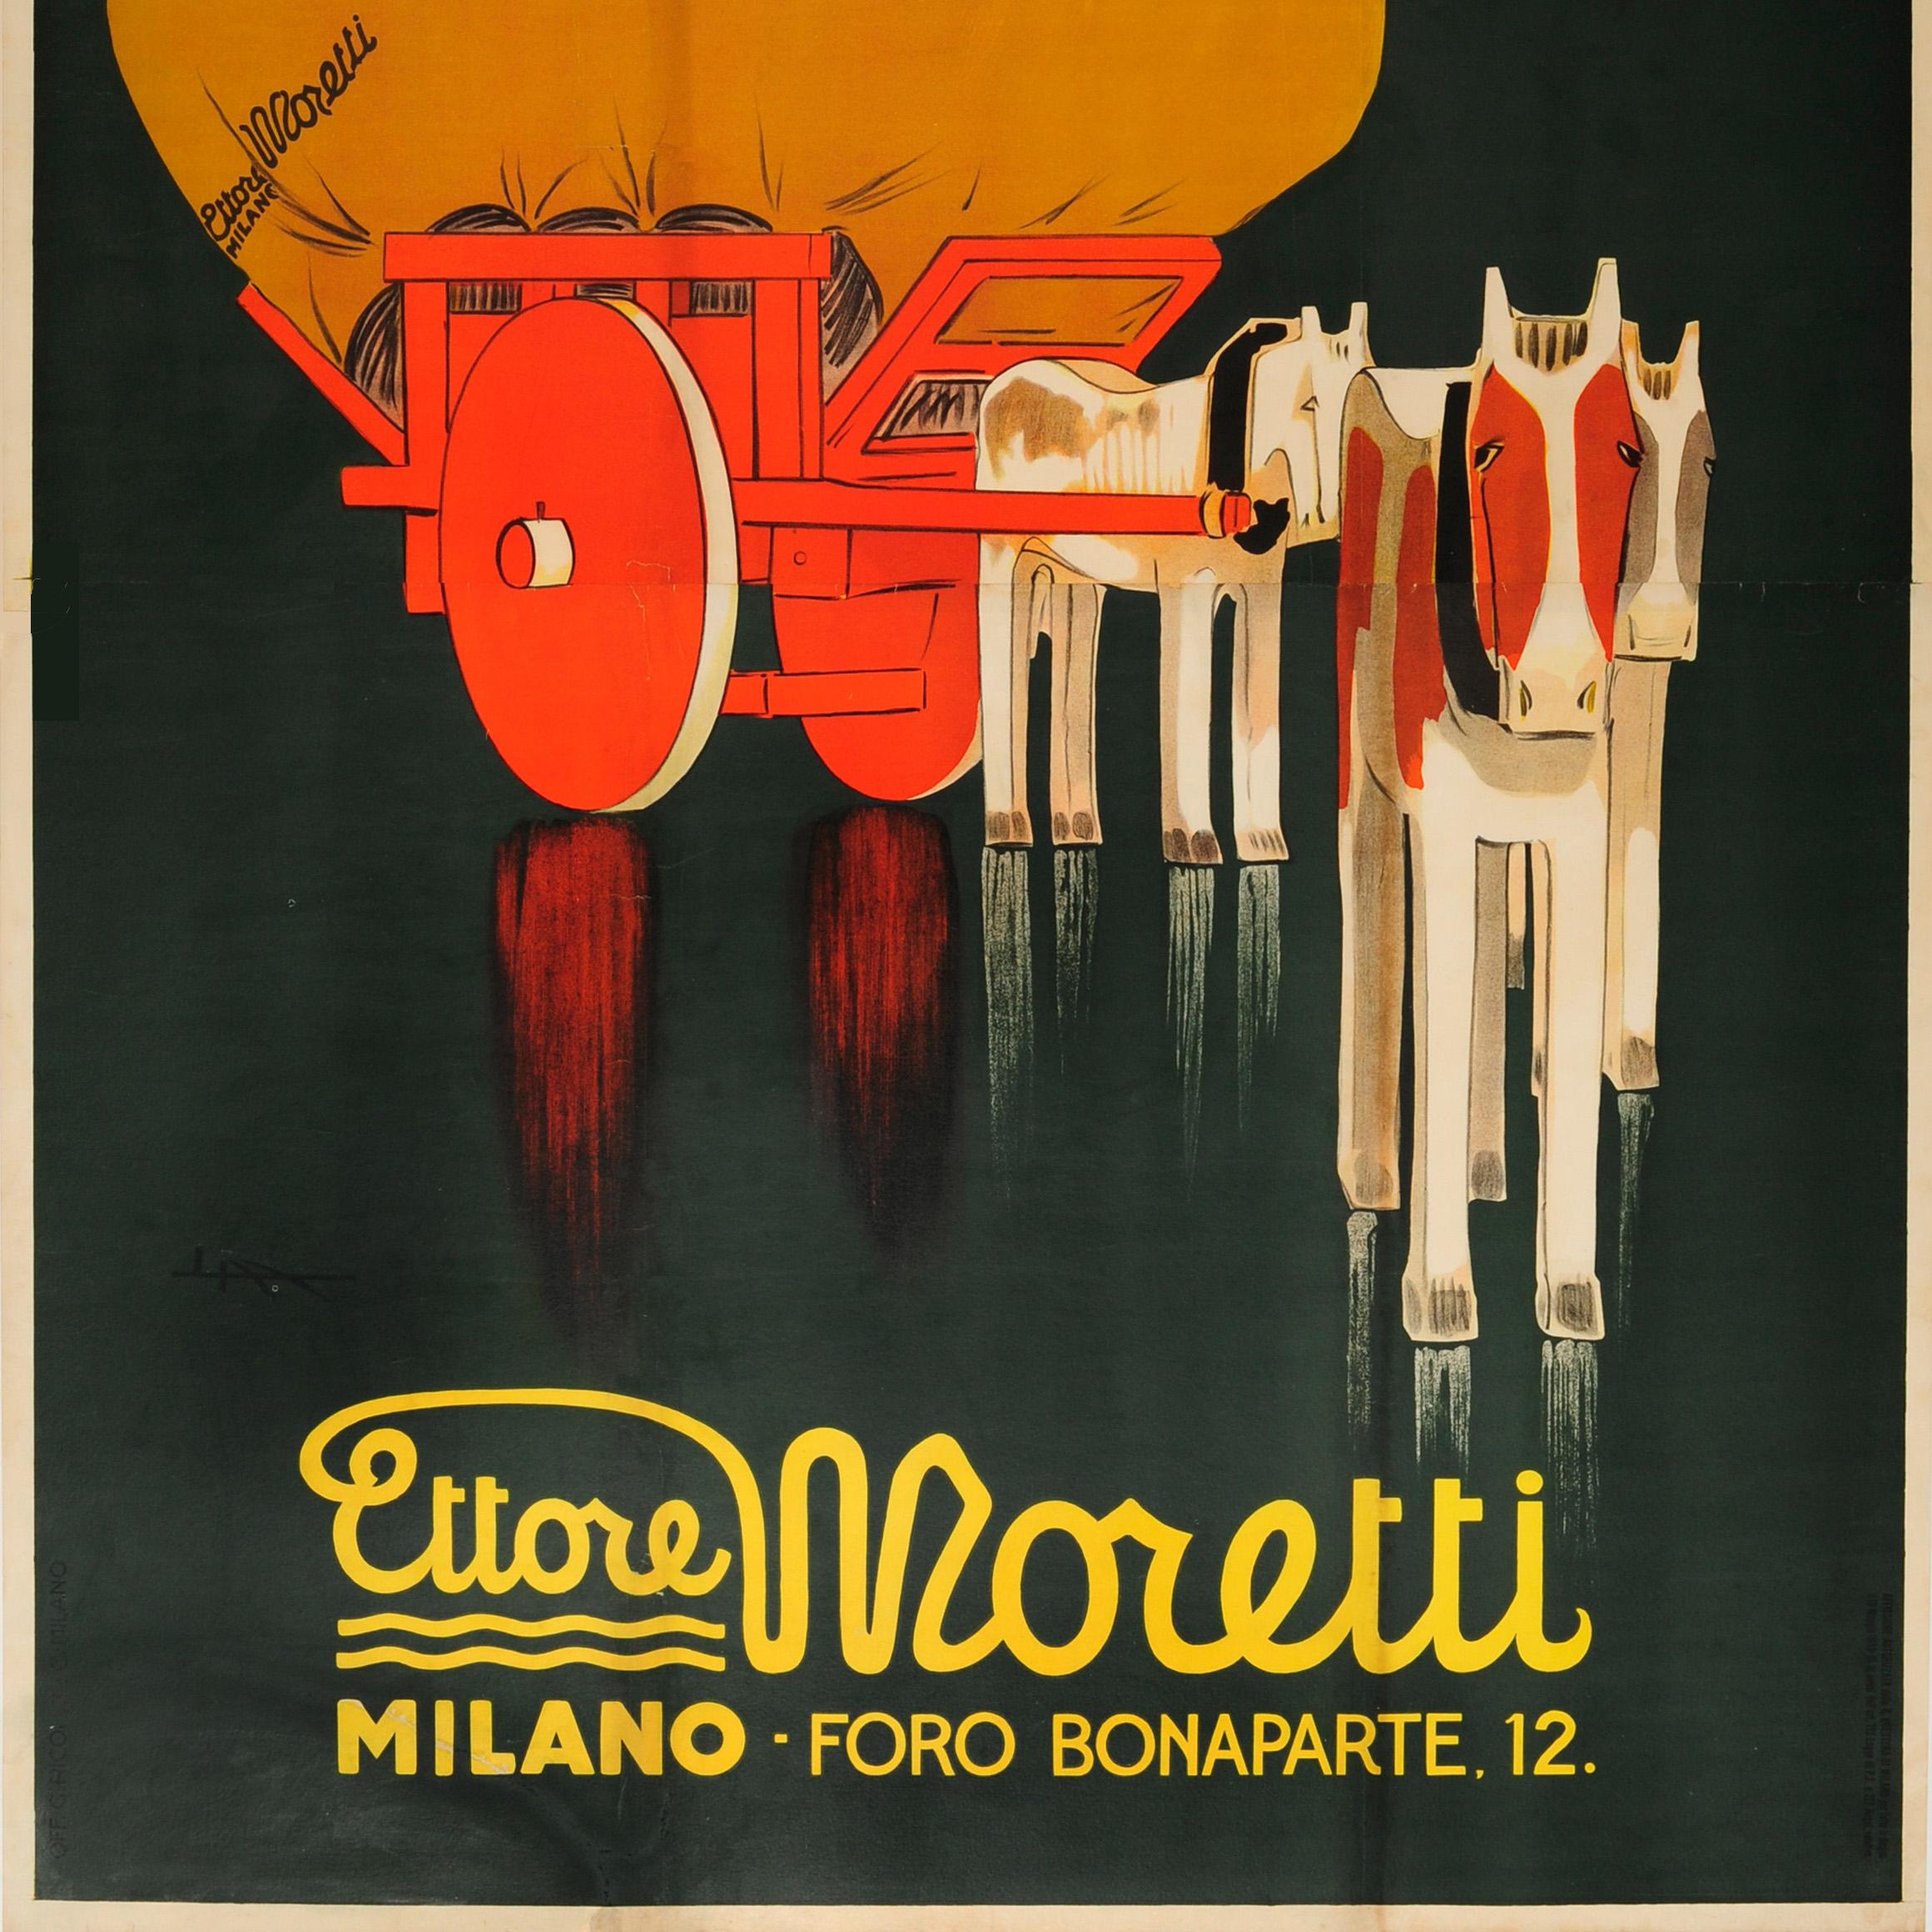 Original Vintage Advertising Poster Waterproof Tarpaulin Ettore Moretti Milano In Good Condition For Sale In London, GB